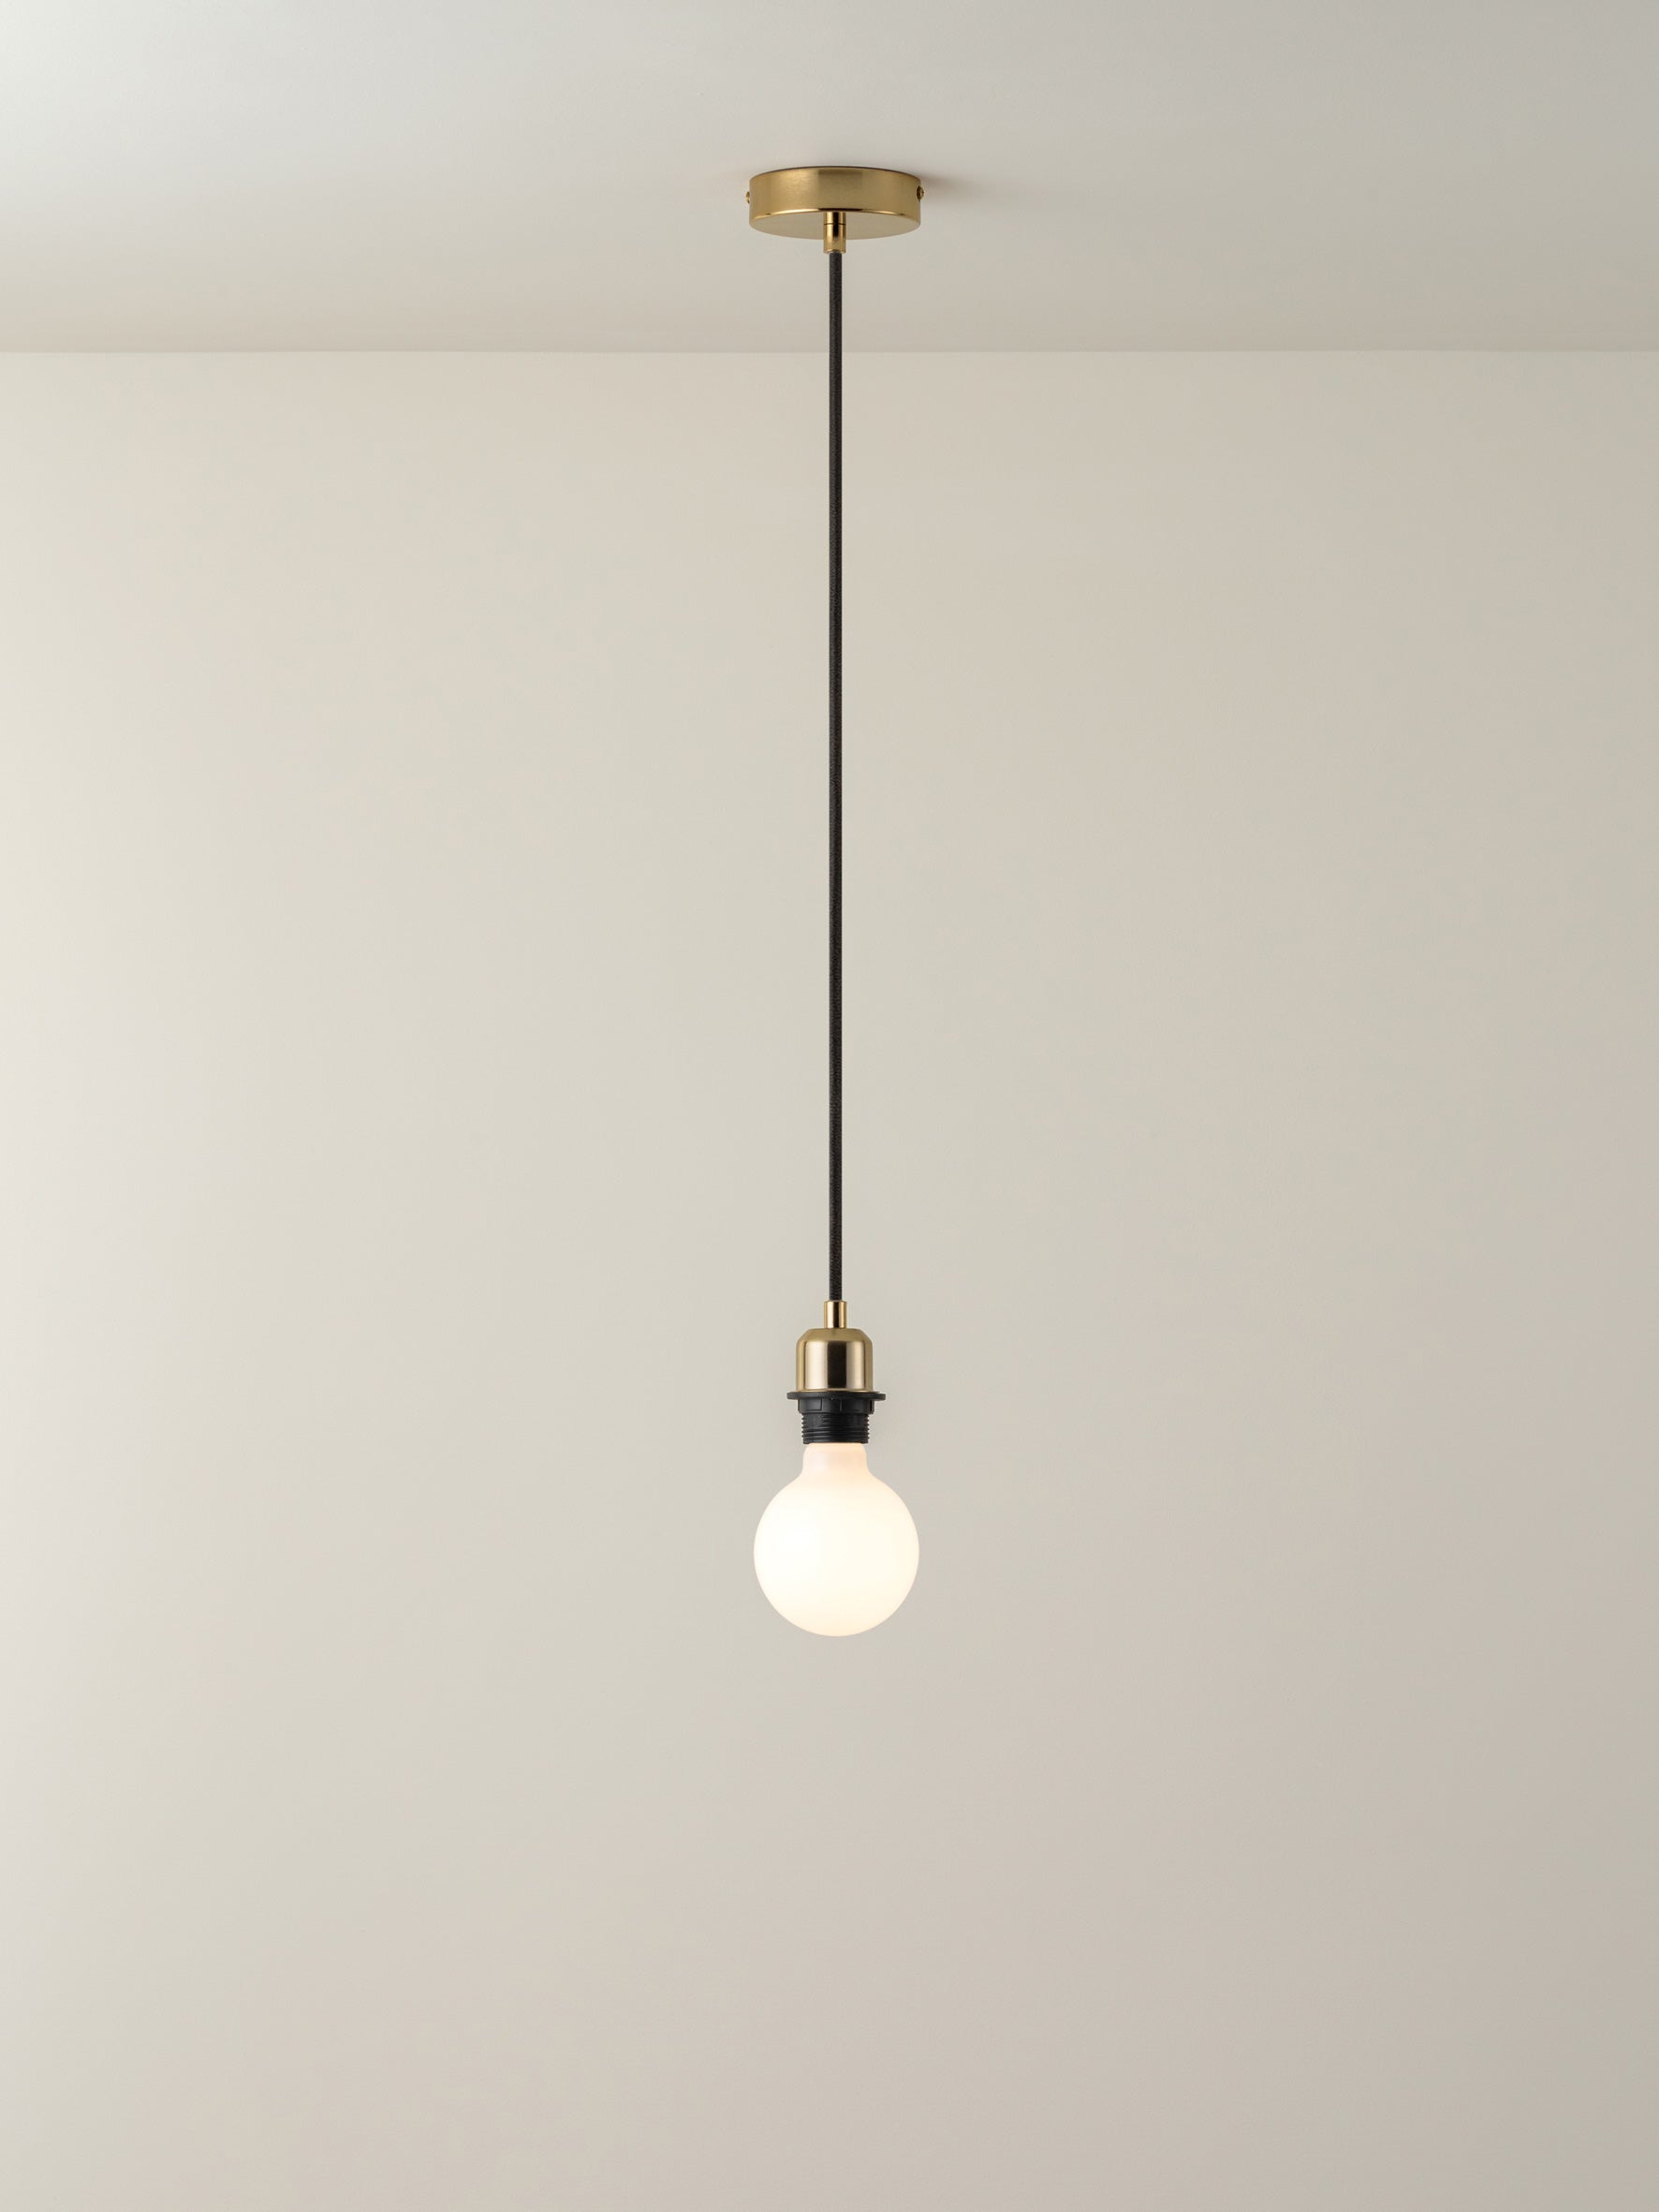 Capel - 1 light brass drop cap lampholder kit | Ceiling Light | Lights & Lamps Inc | Modern Affordable Designer Lighting | USA